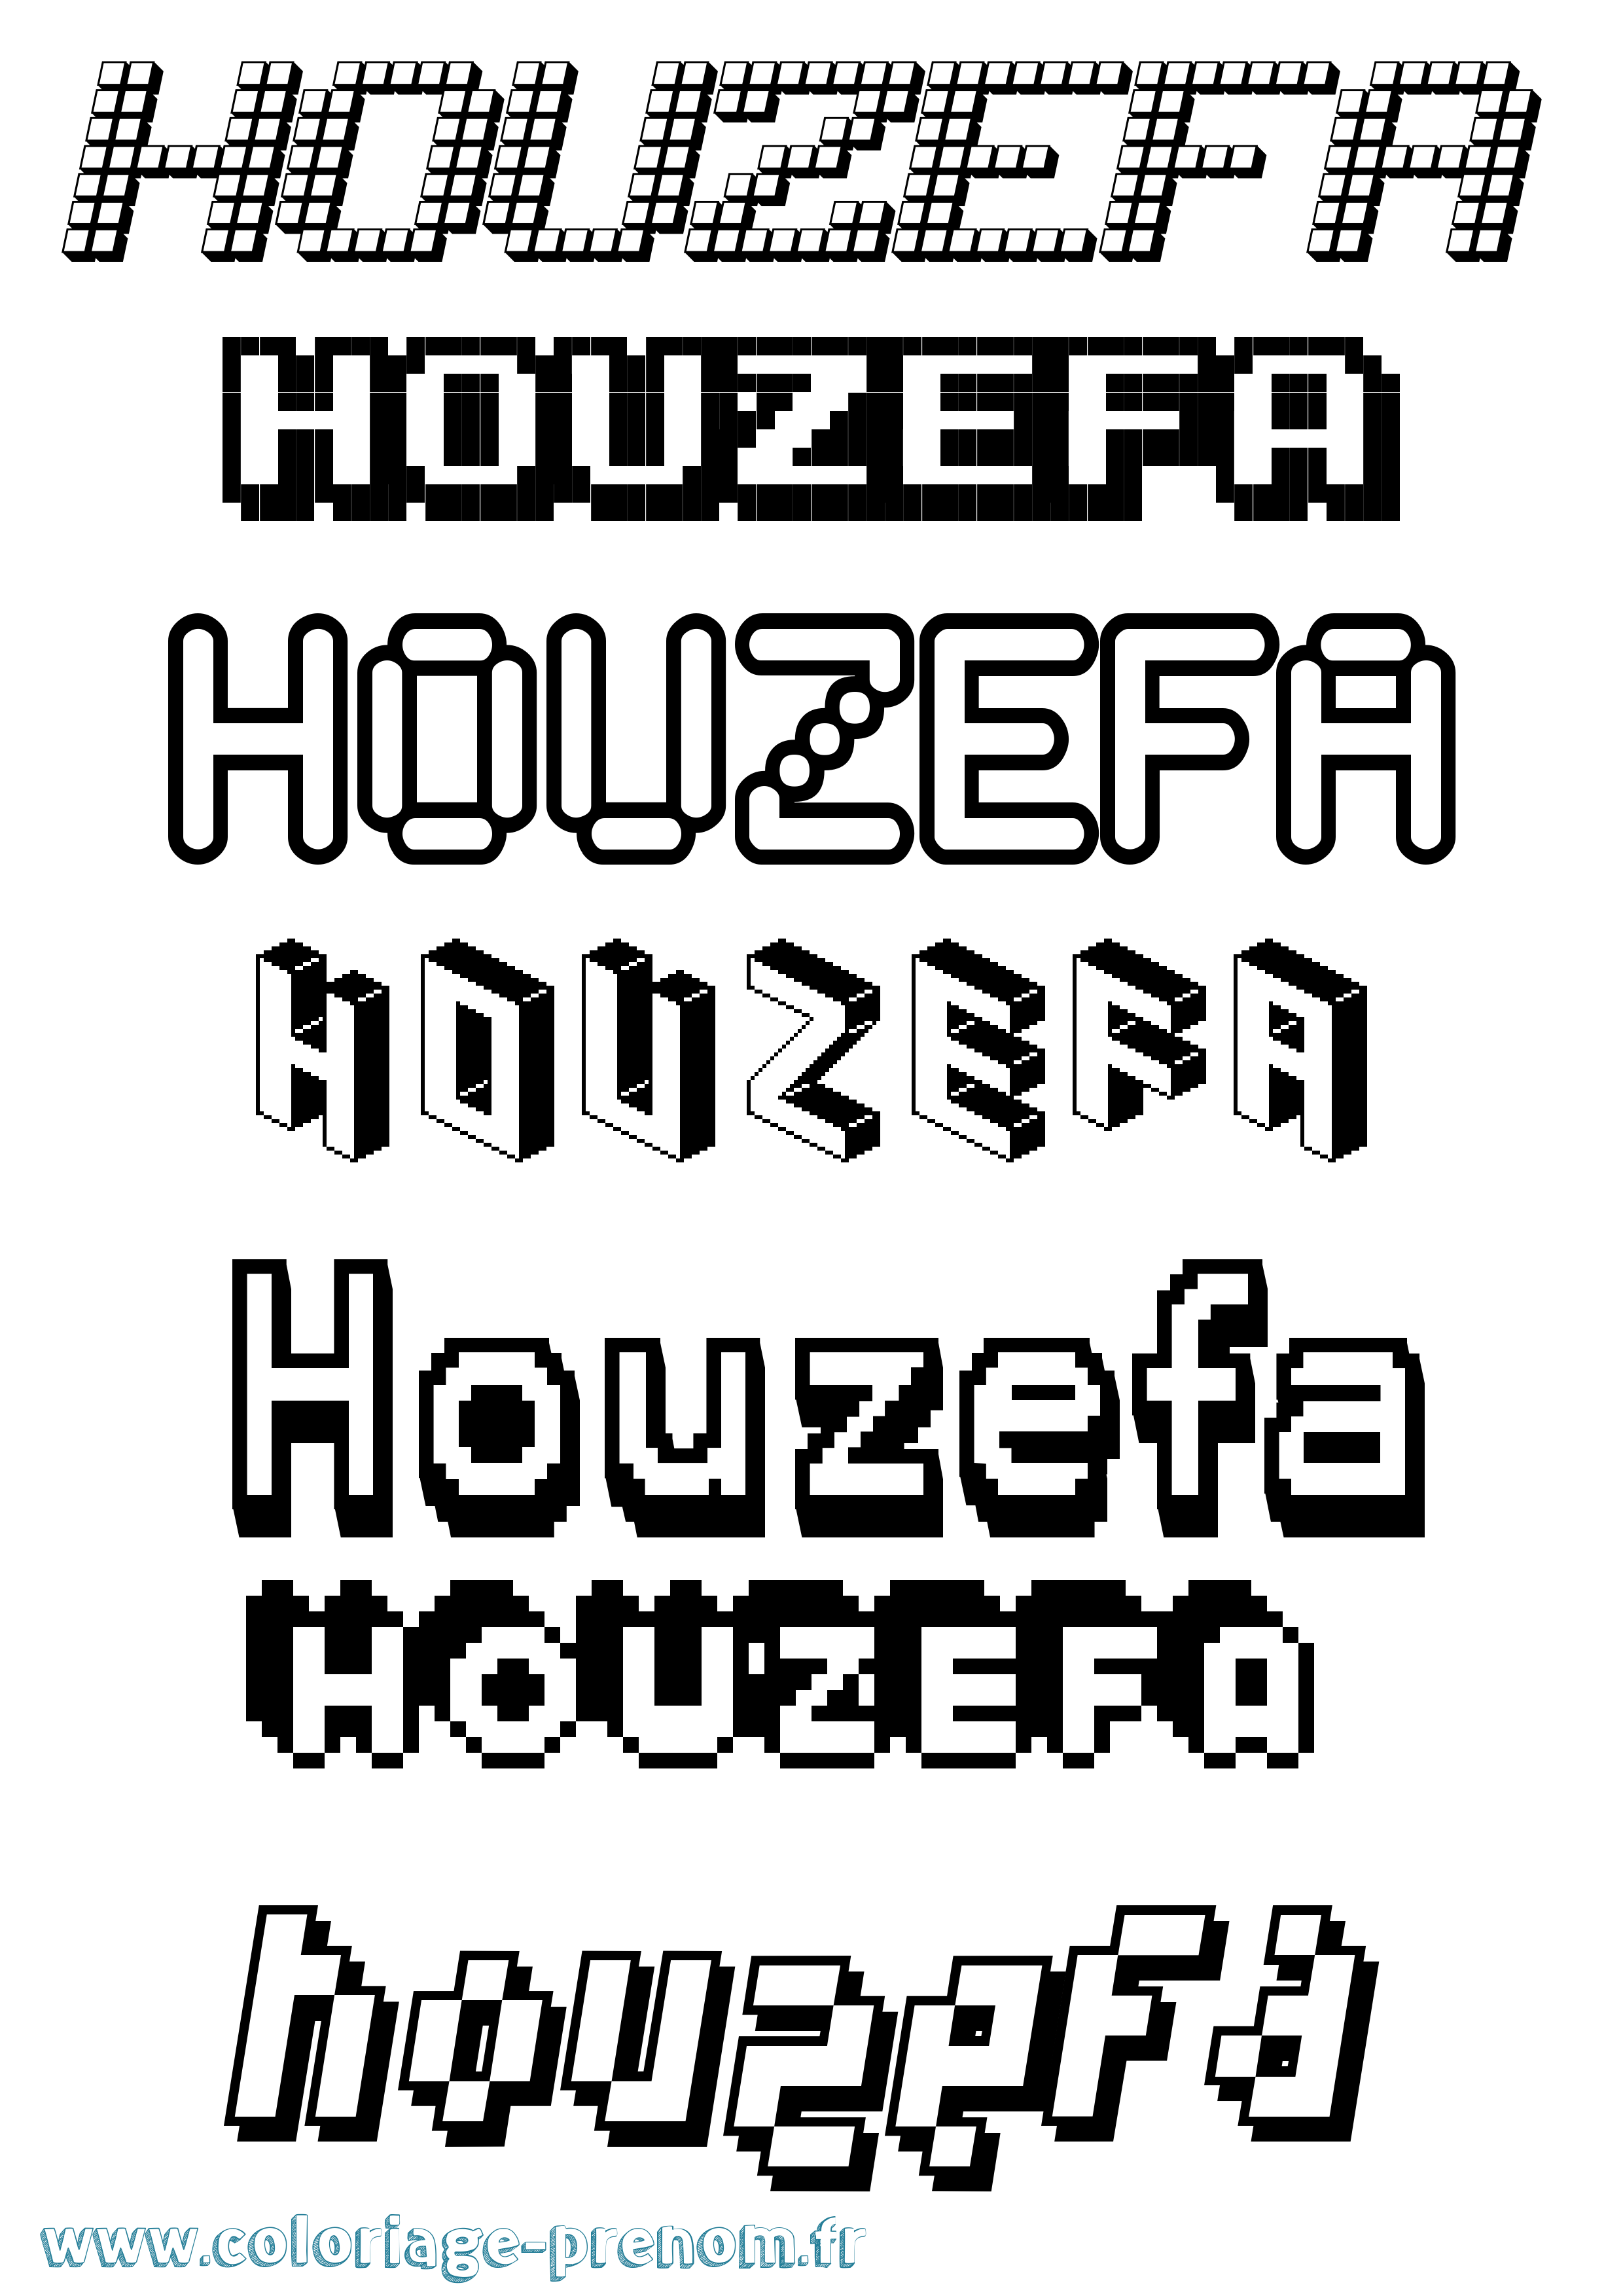 Coloriage prénom Houzefa Pixel